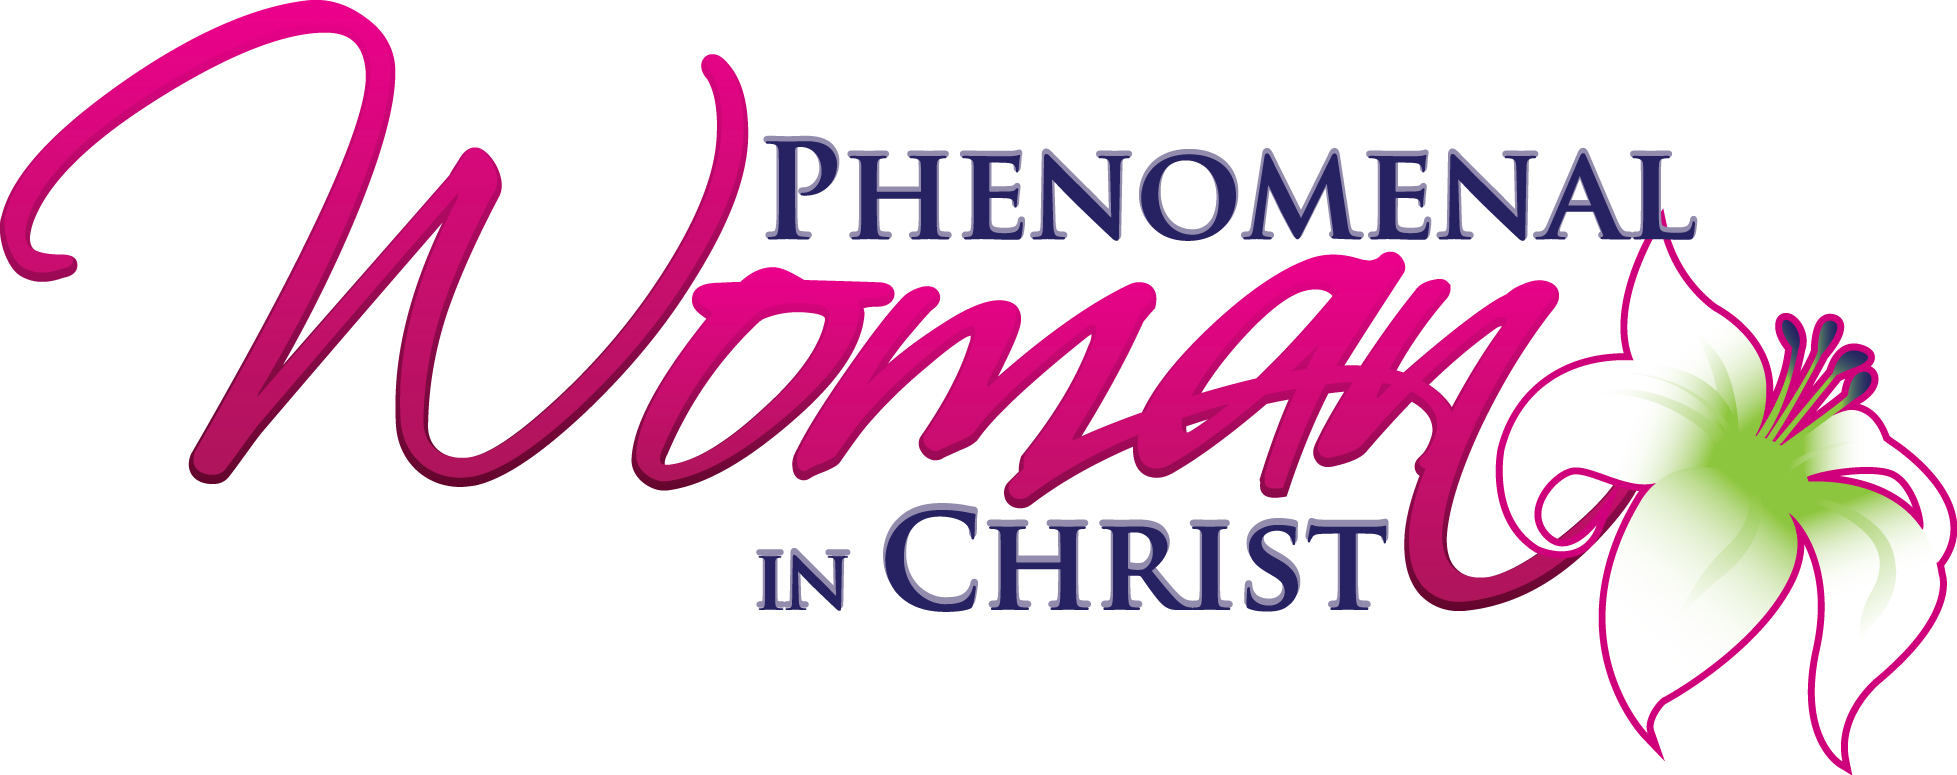 phenomenal woman in christ logo